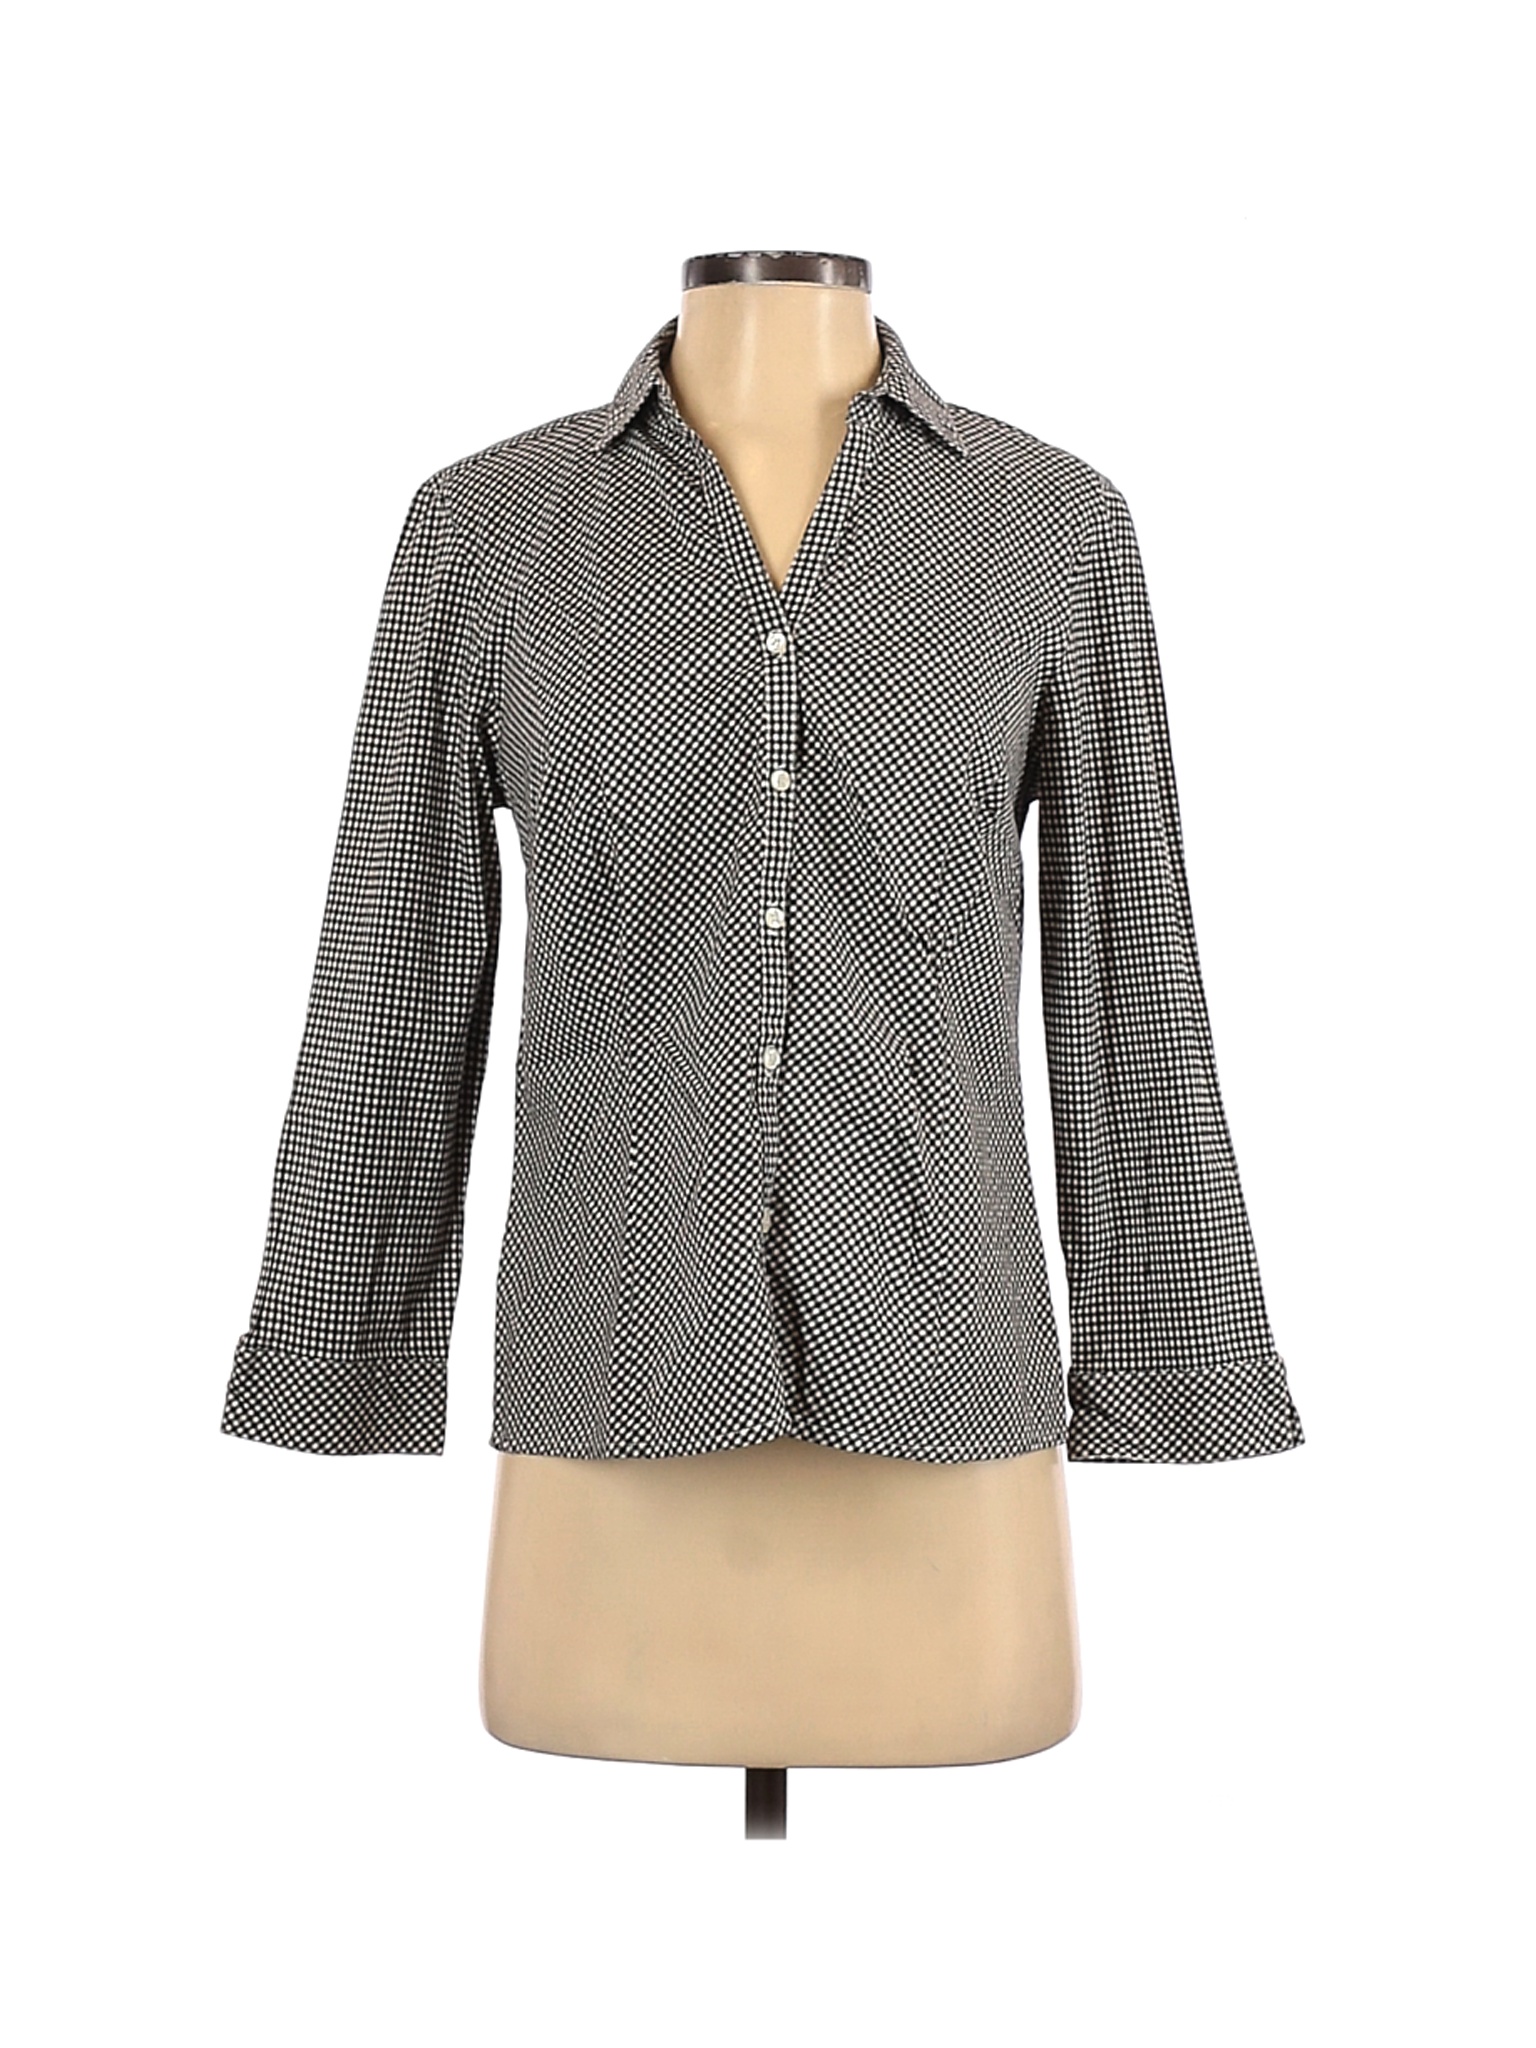 SONOMA life + style Women Black Long Sleeve Button-Down Shirt S | eBay